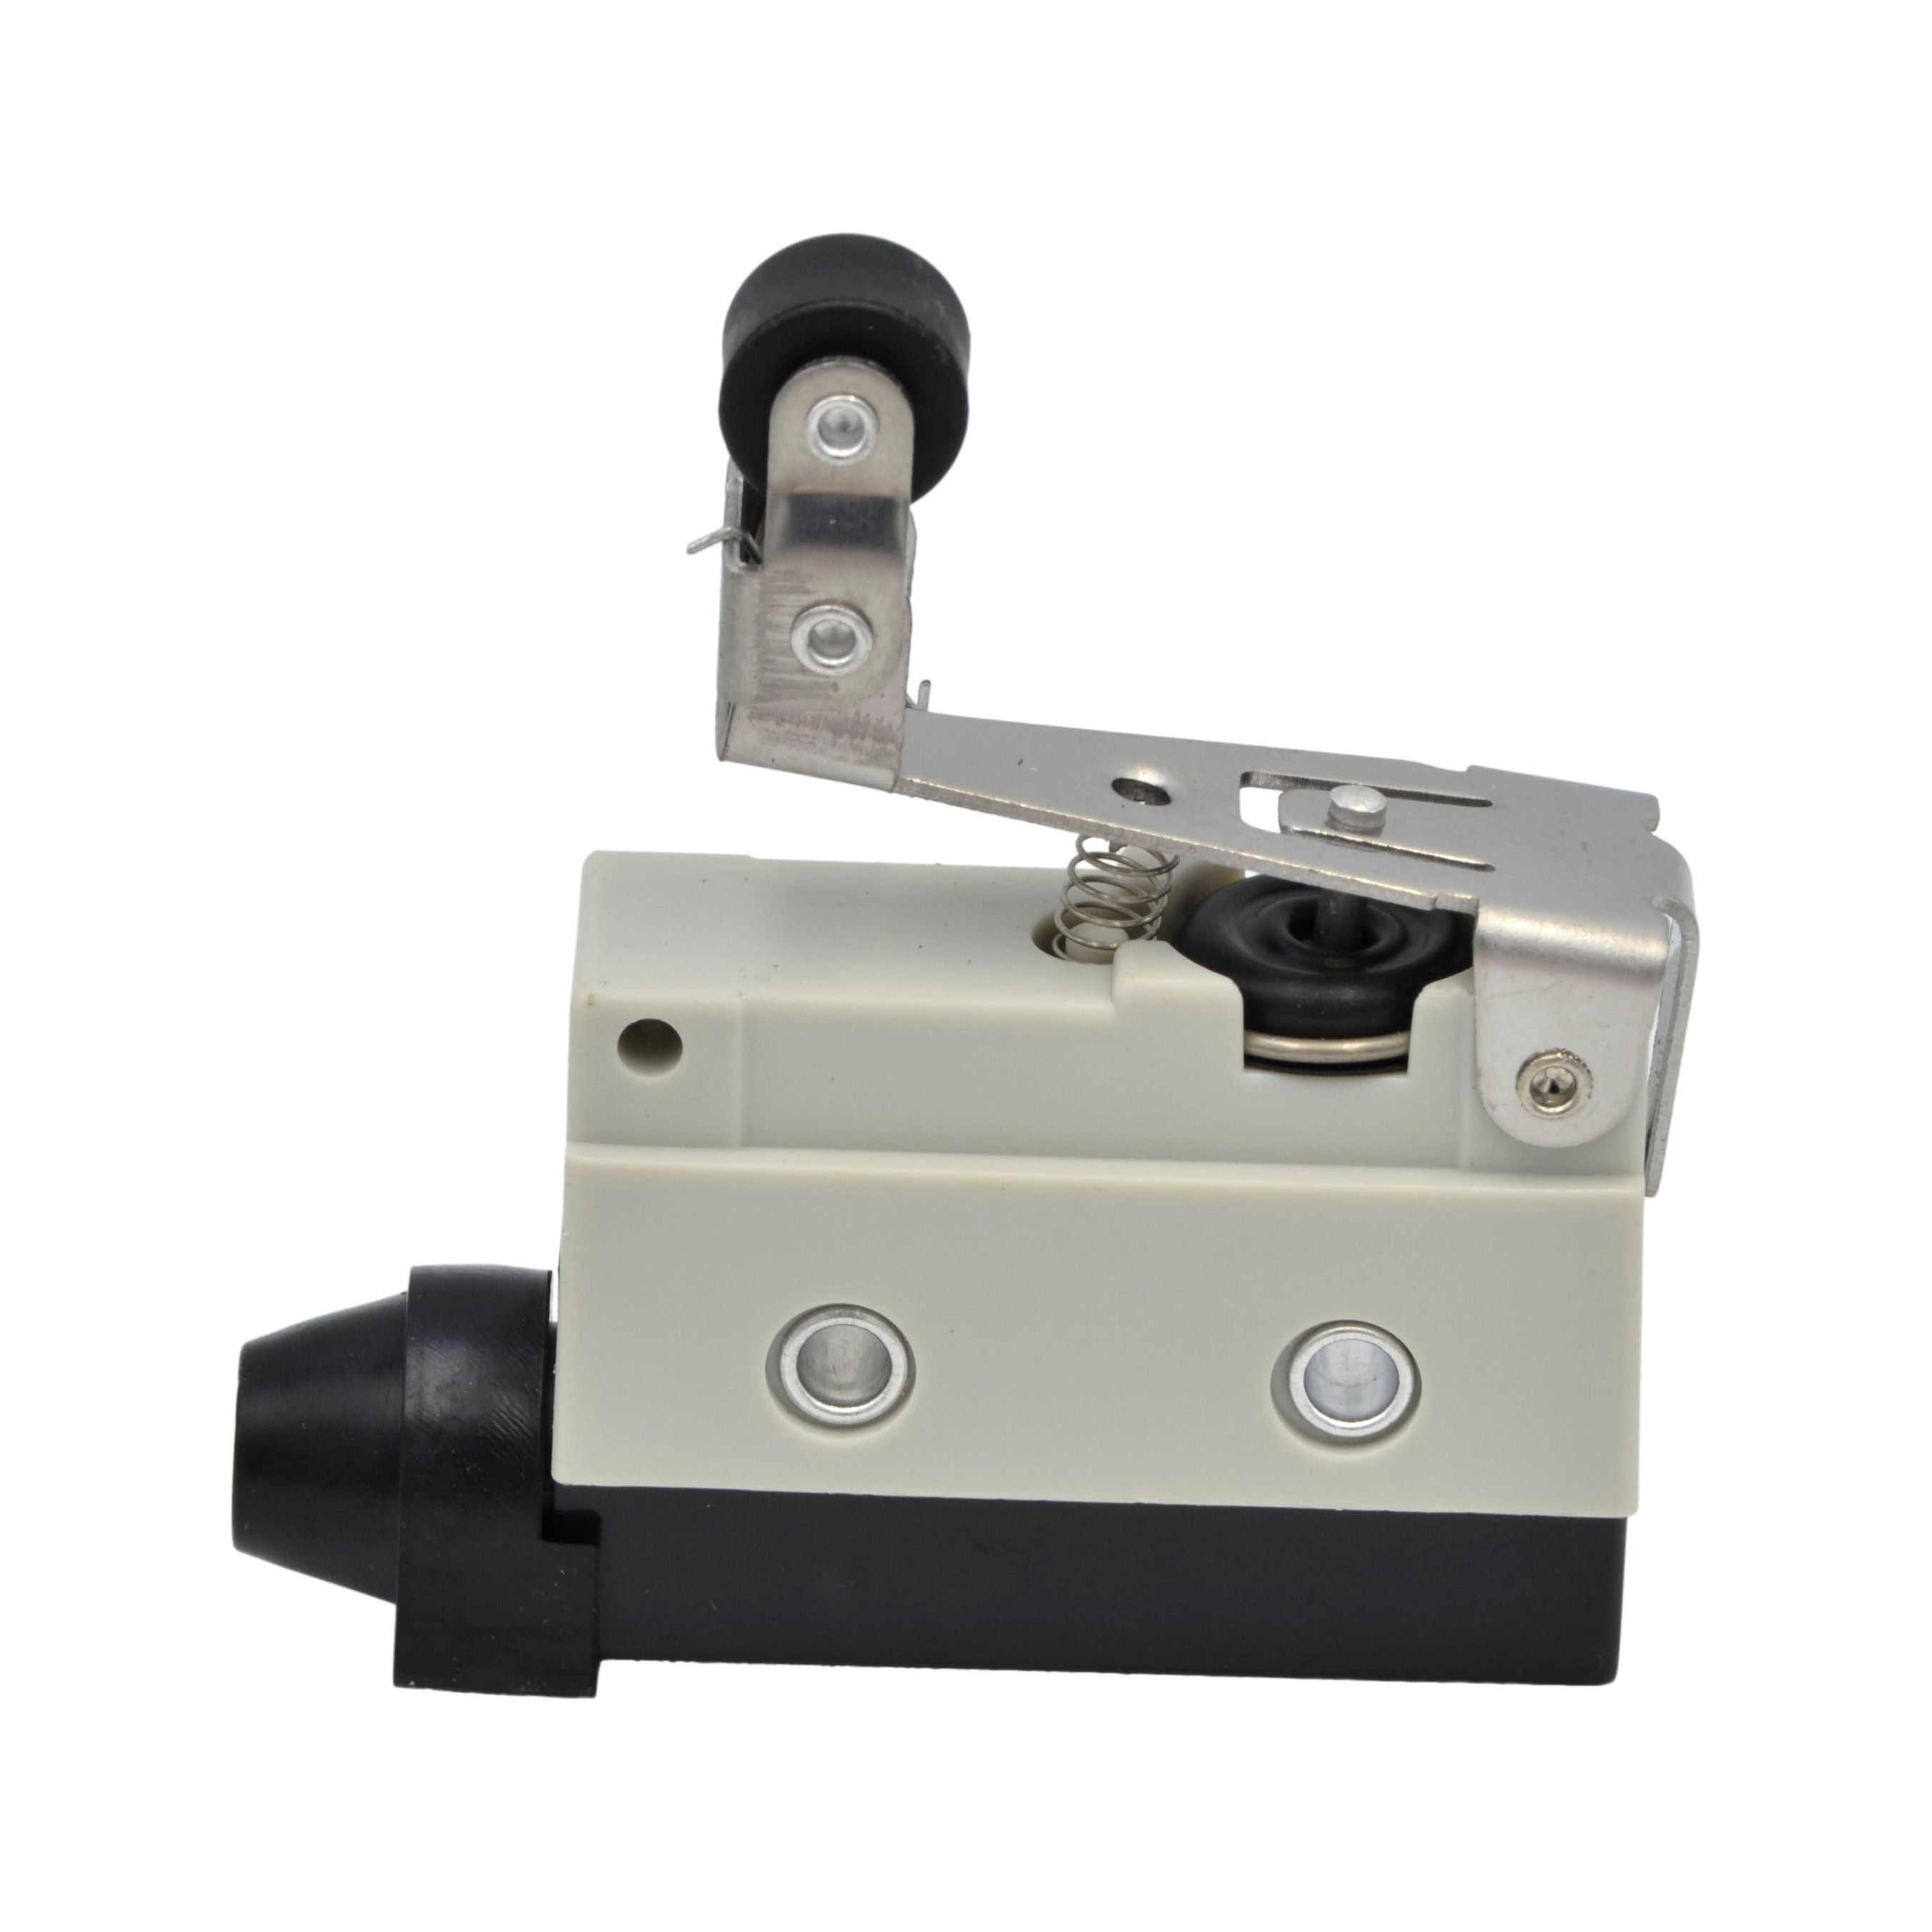 AZ-7144 Roller Lever Actuator Type Limit Switch